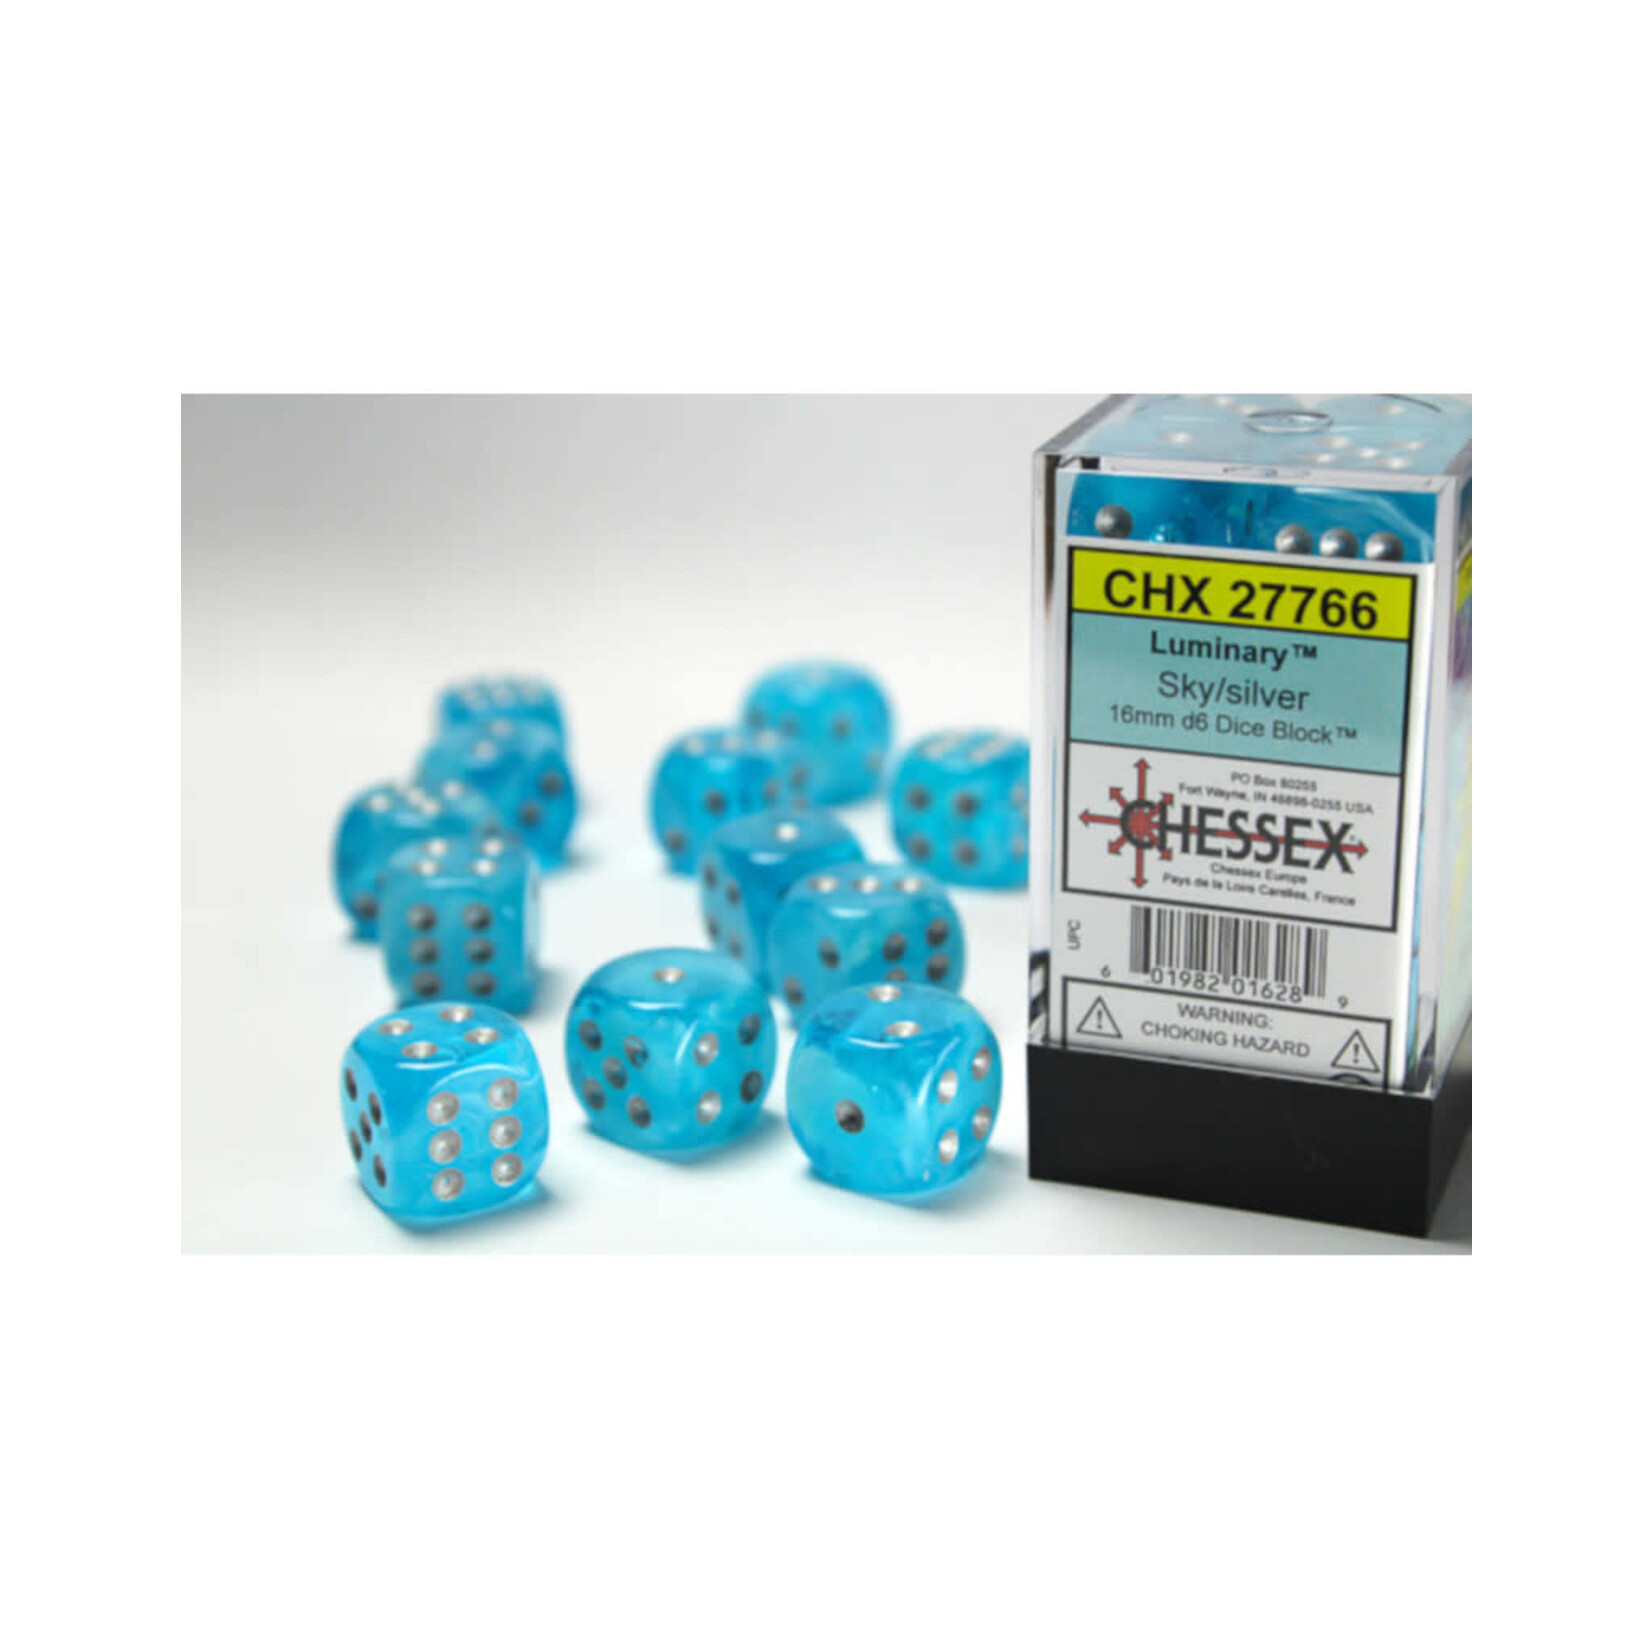 Chessex Luminary Sky/silver 16mm d6 Dice Block (12 dice)